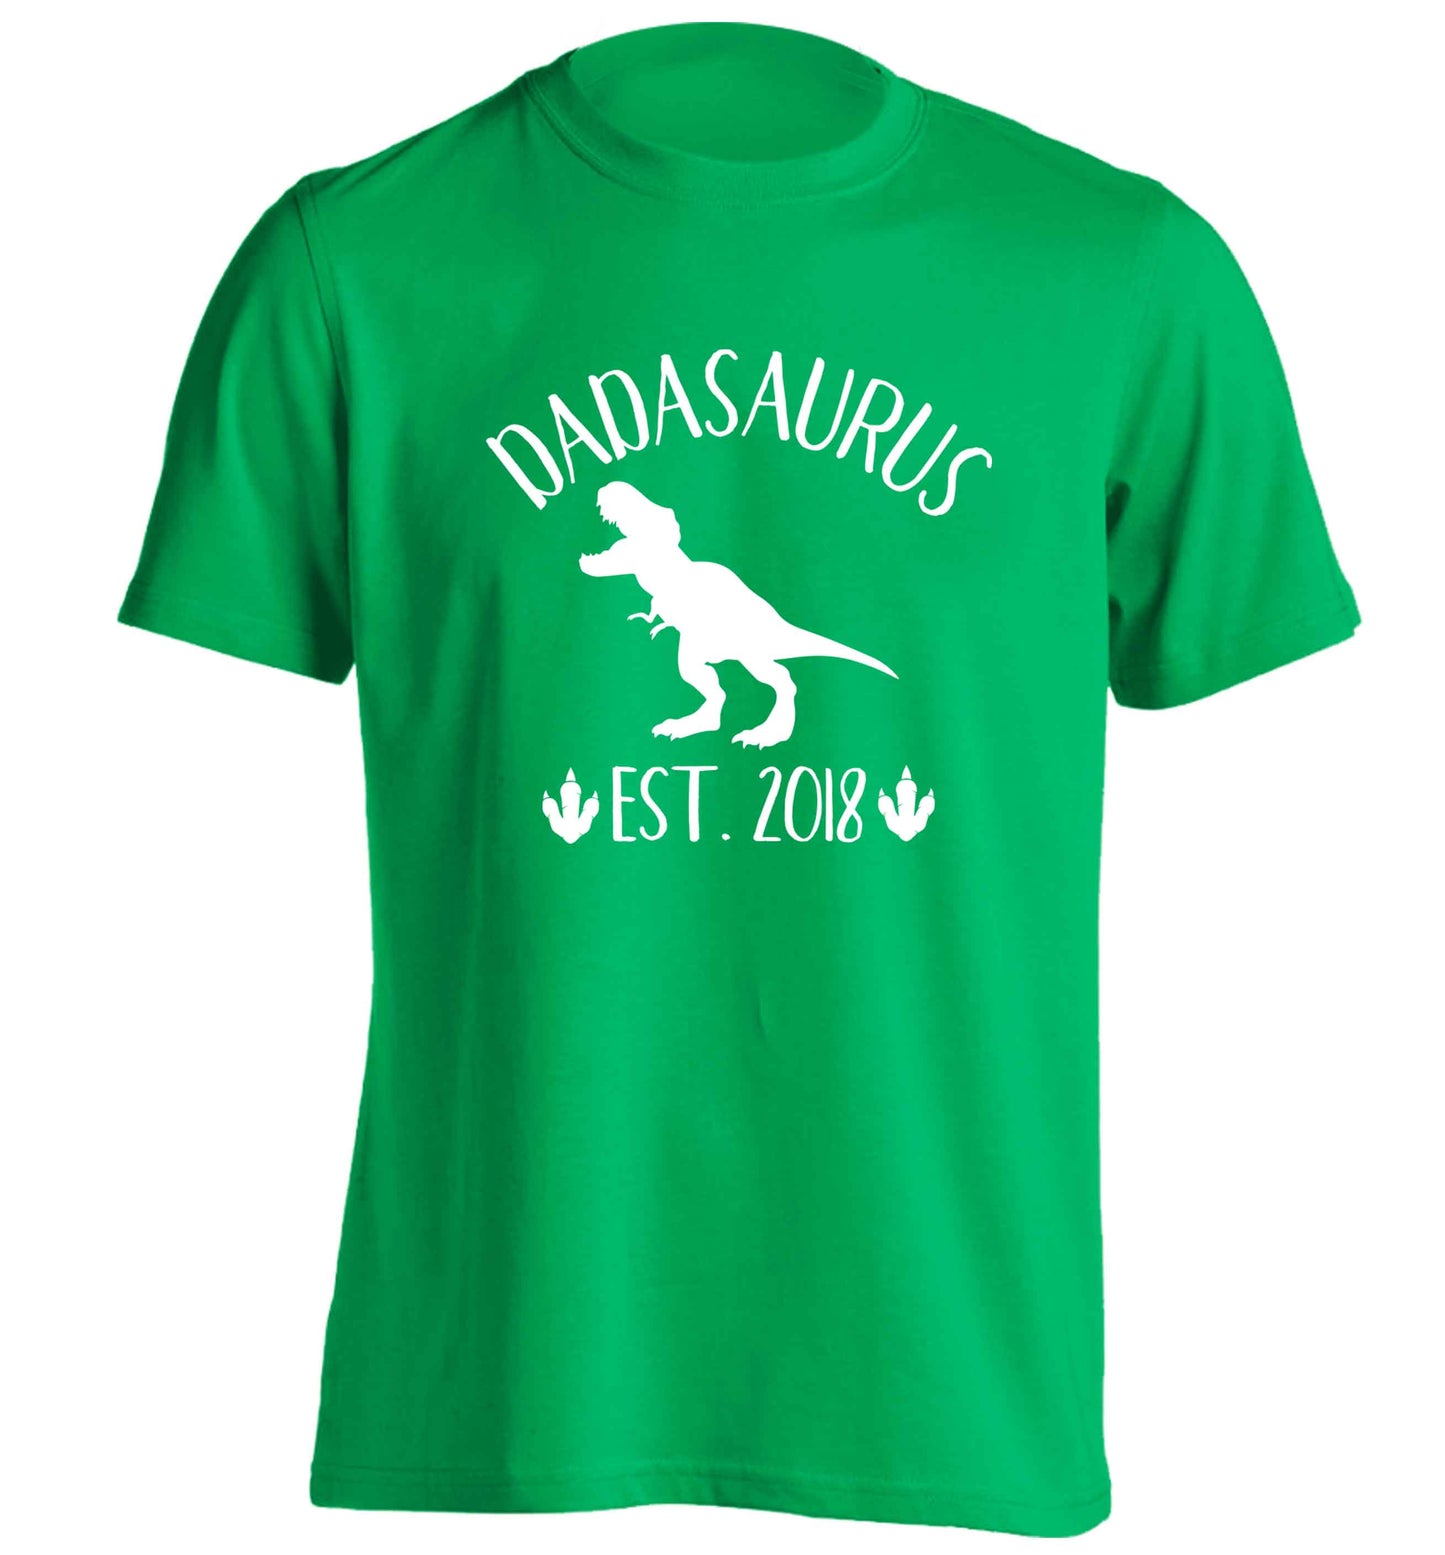 Personalised dadasaurus since (custom date) adults unisex green Tshirt 2XL